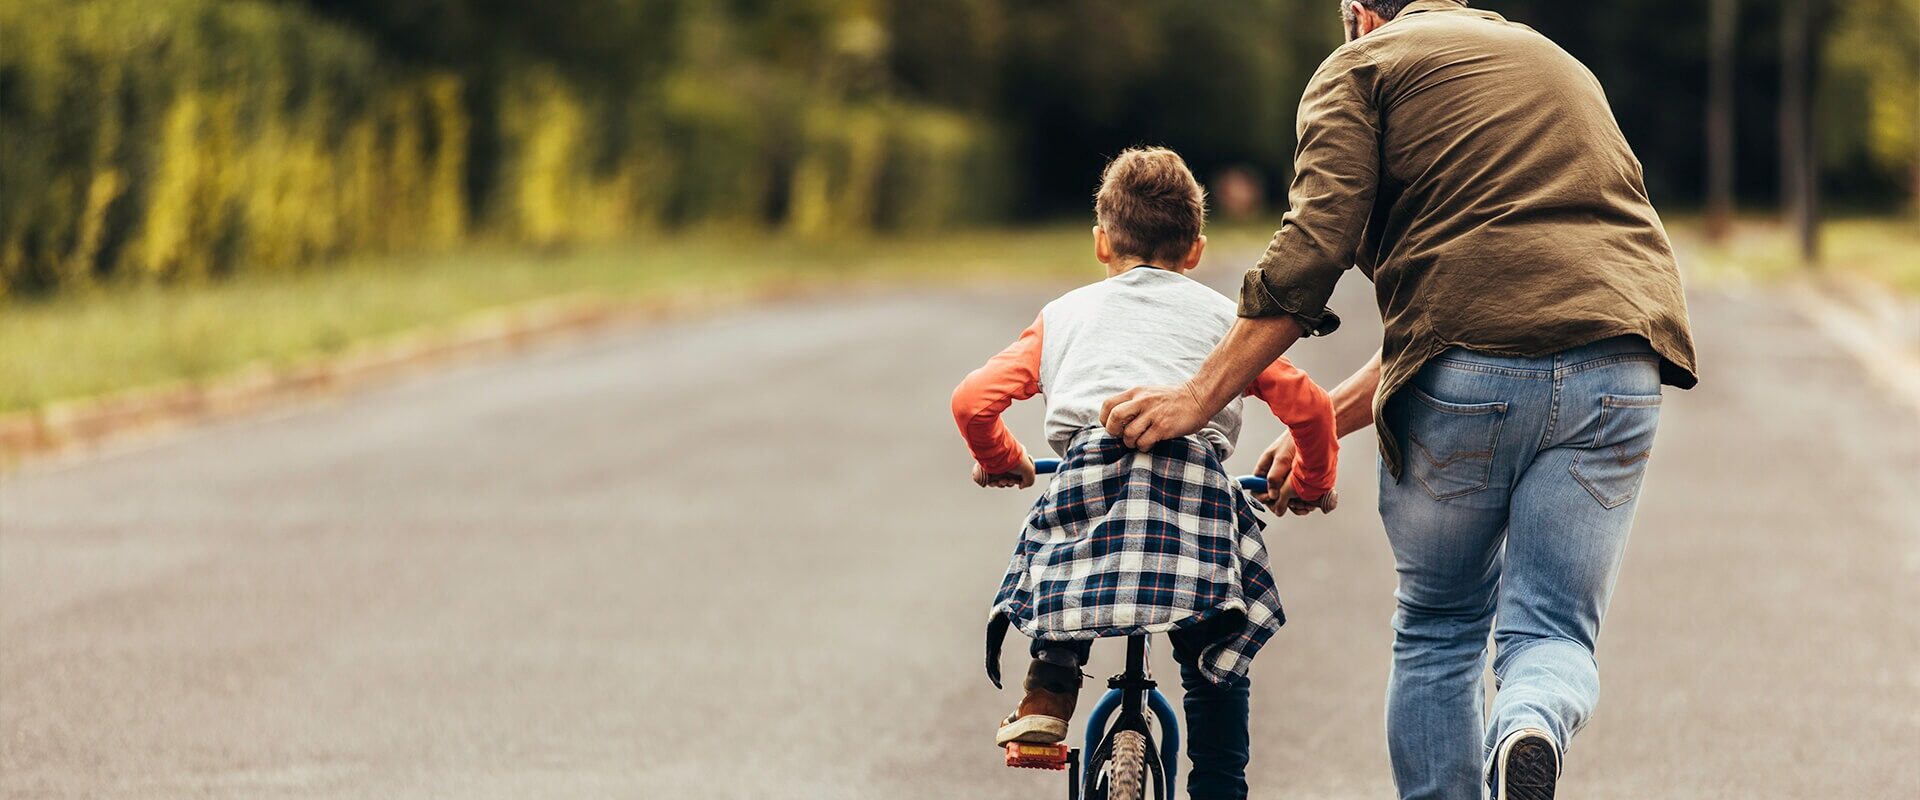 Father teaching child to ride bike